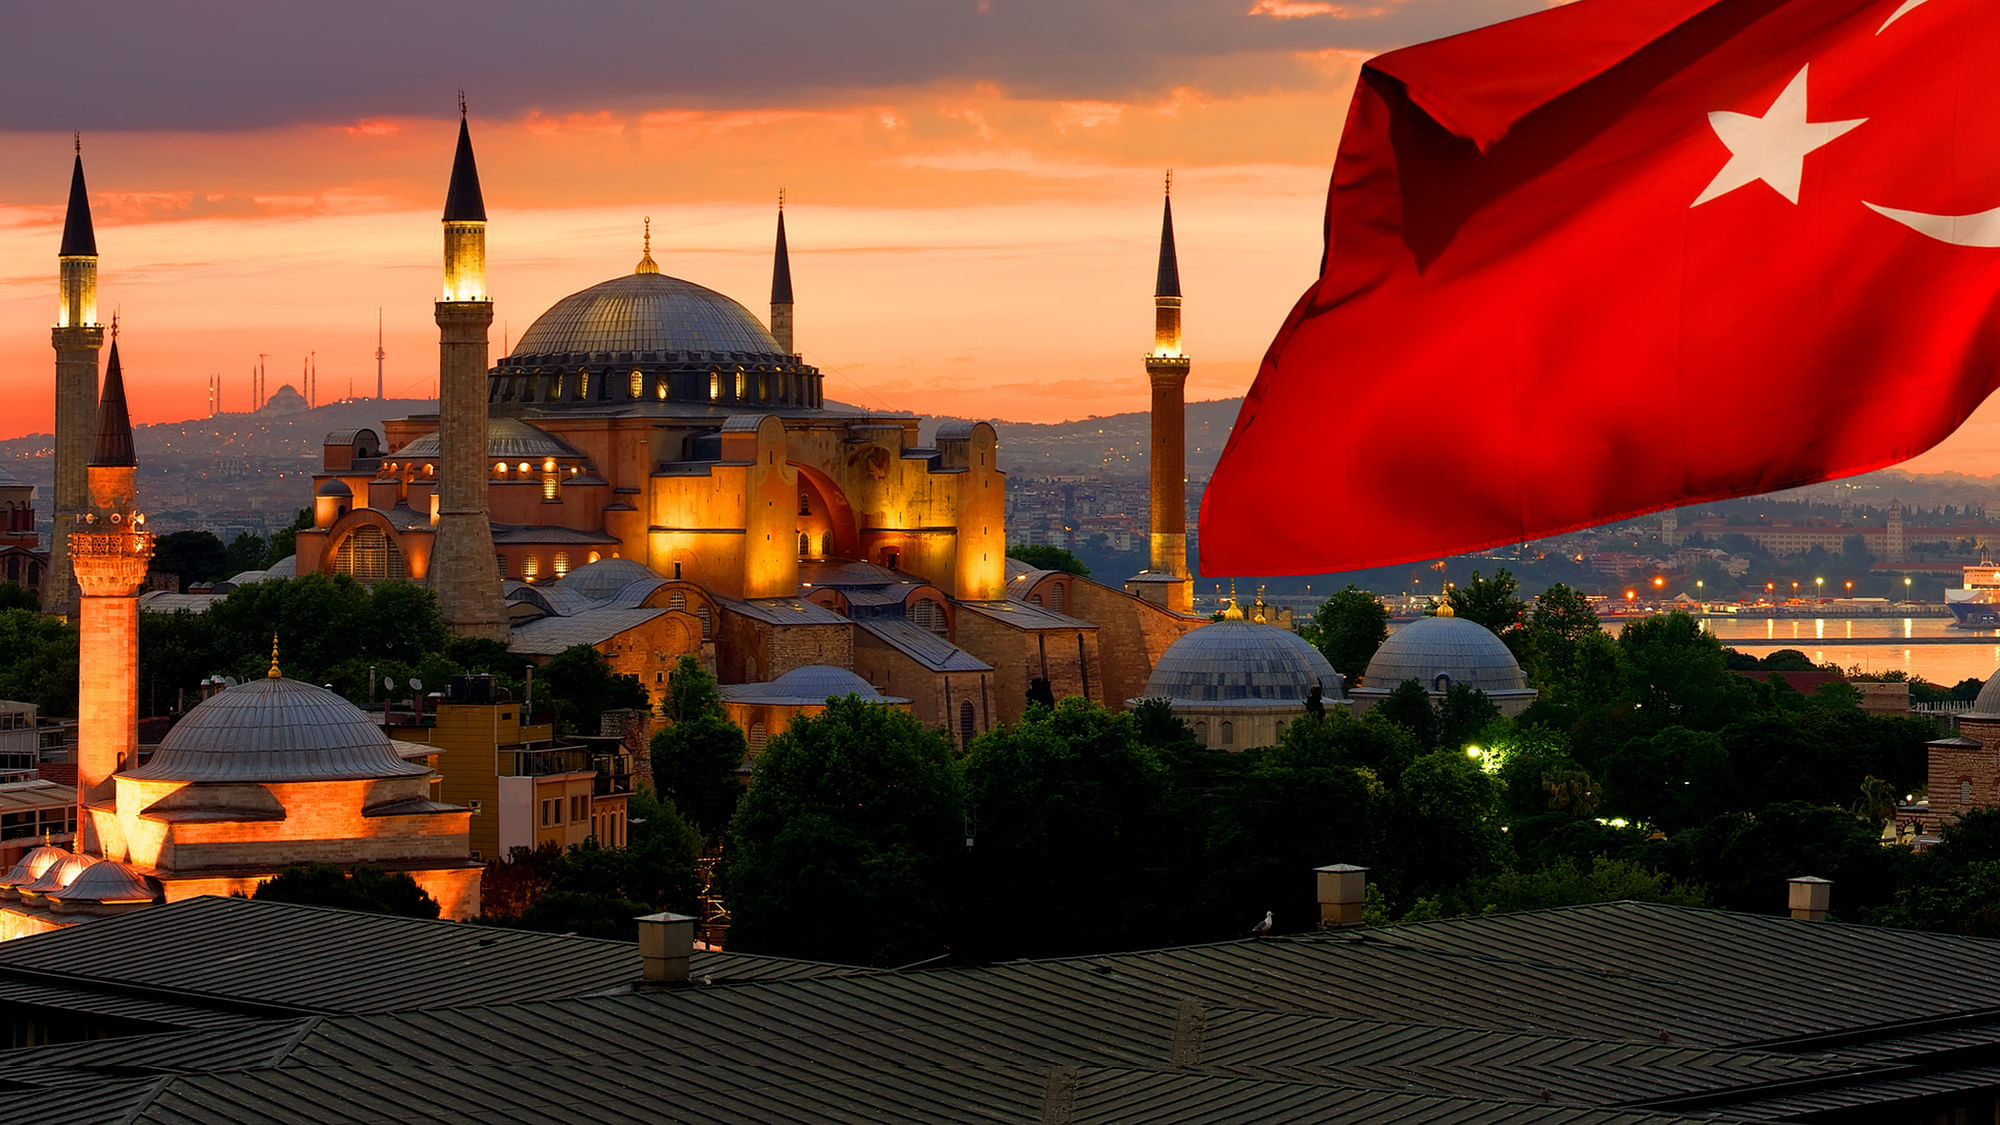 Turkey’s iconic structure, the Hagia Sophia.